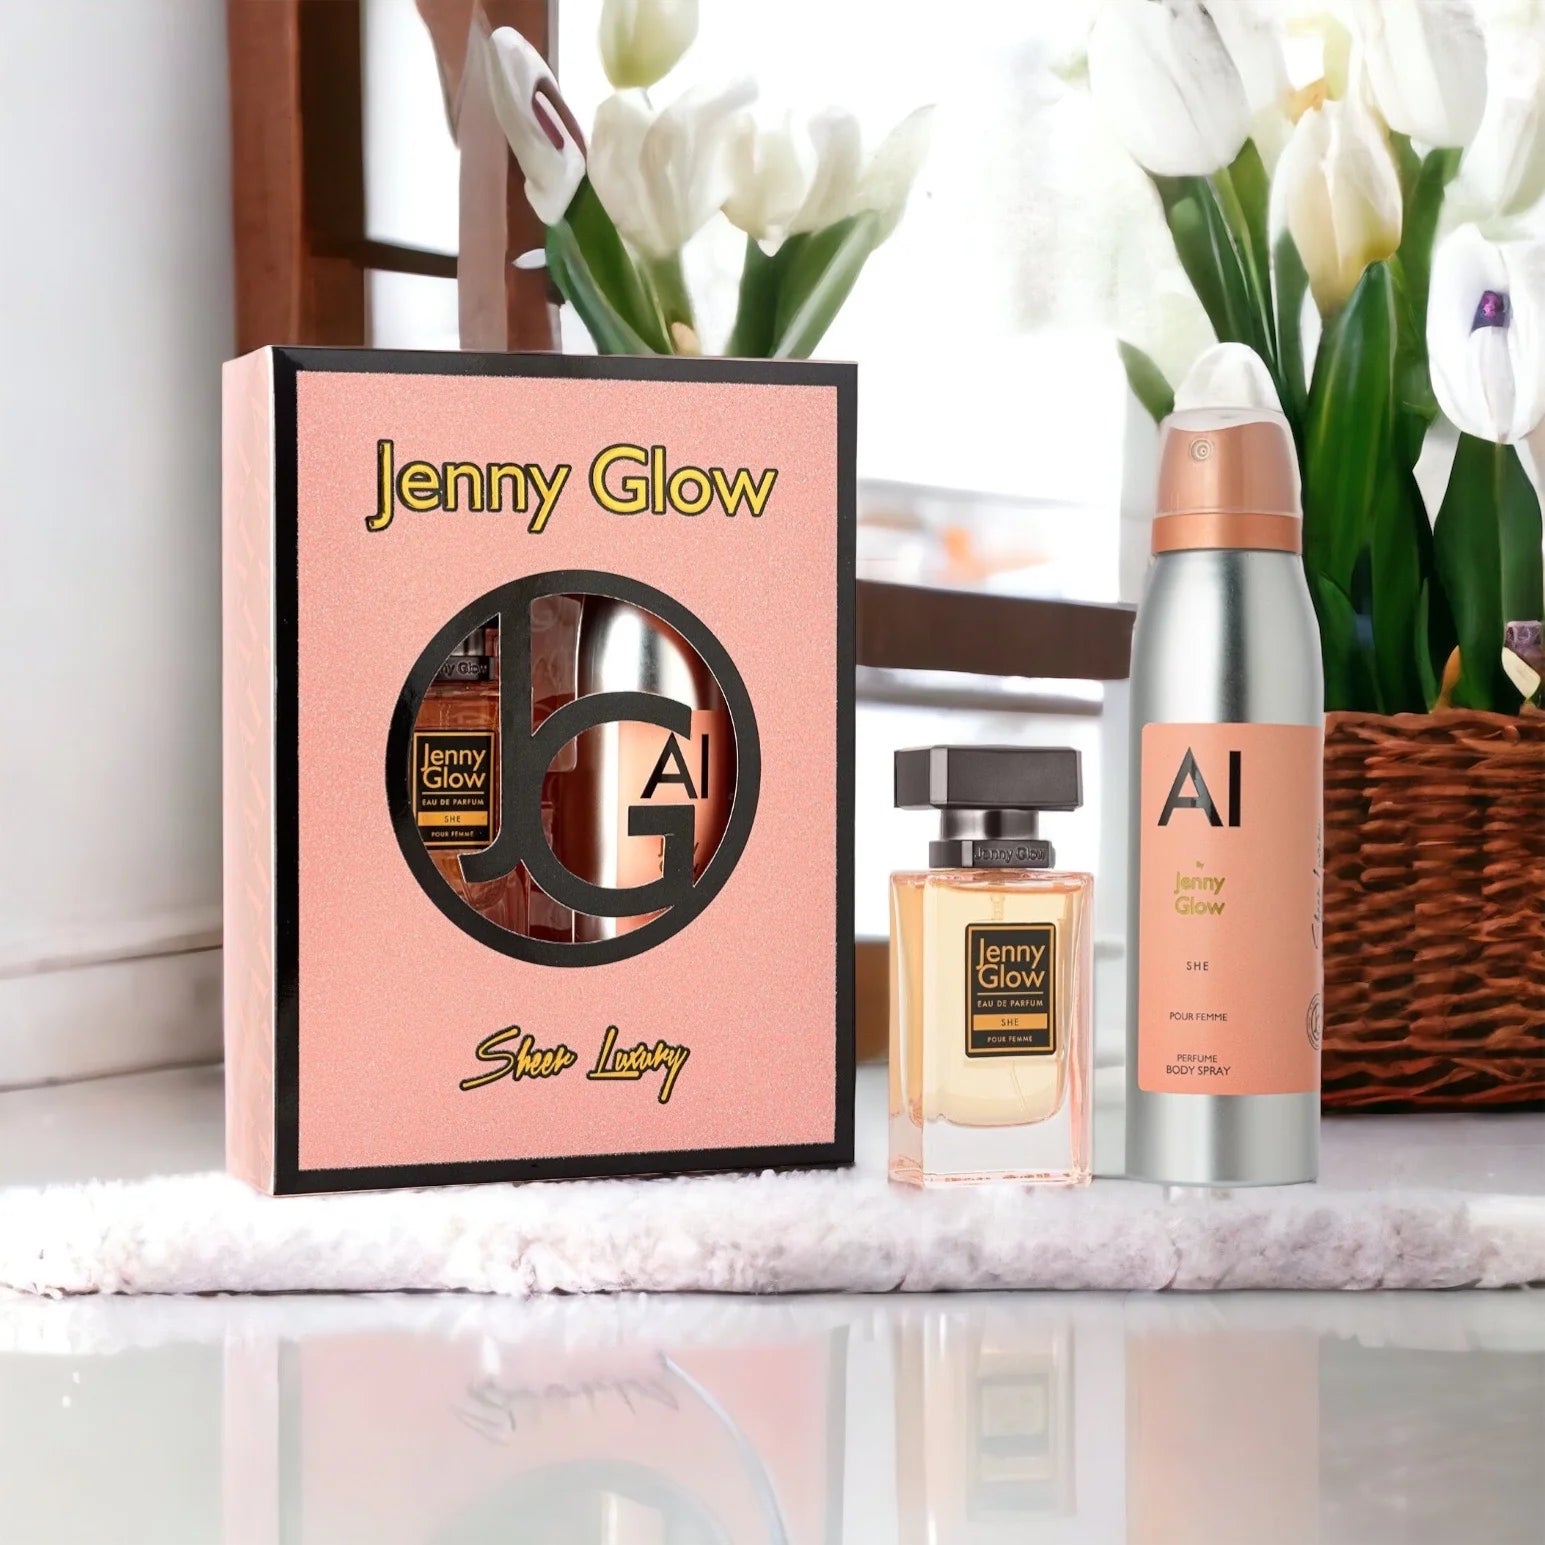 Jenny Glow Perfume & Body Spray Gift Set - She